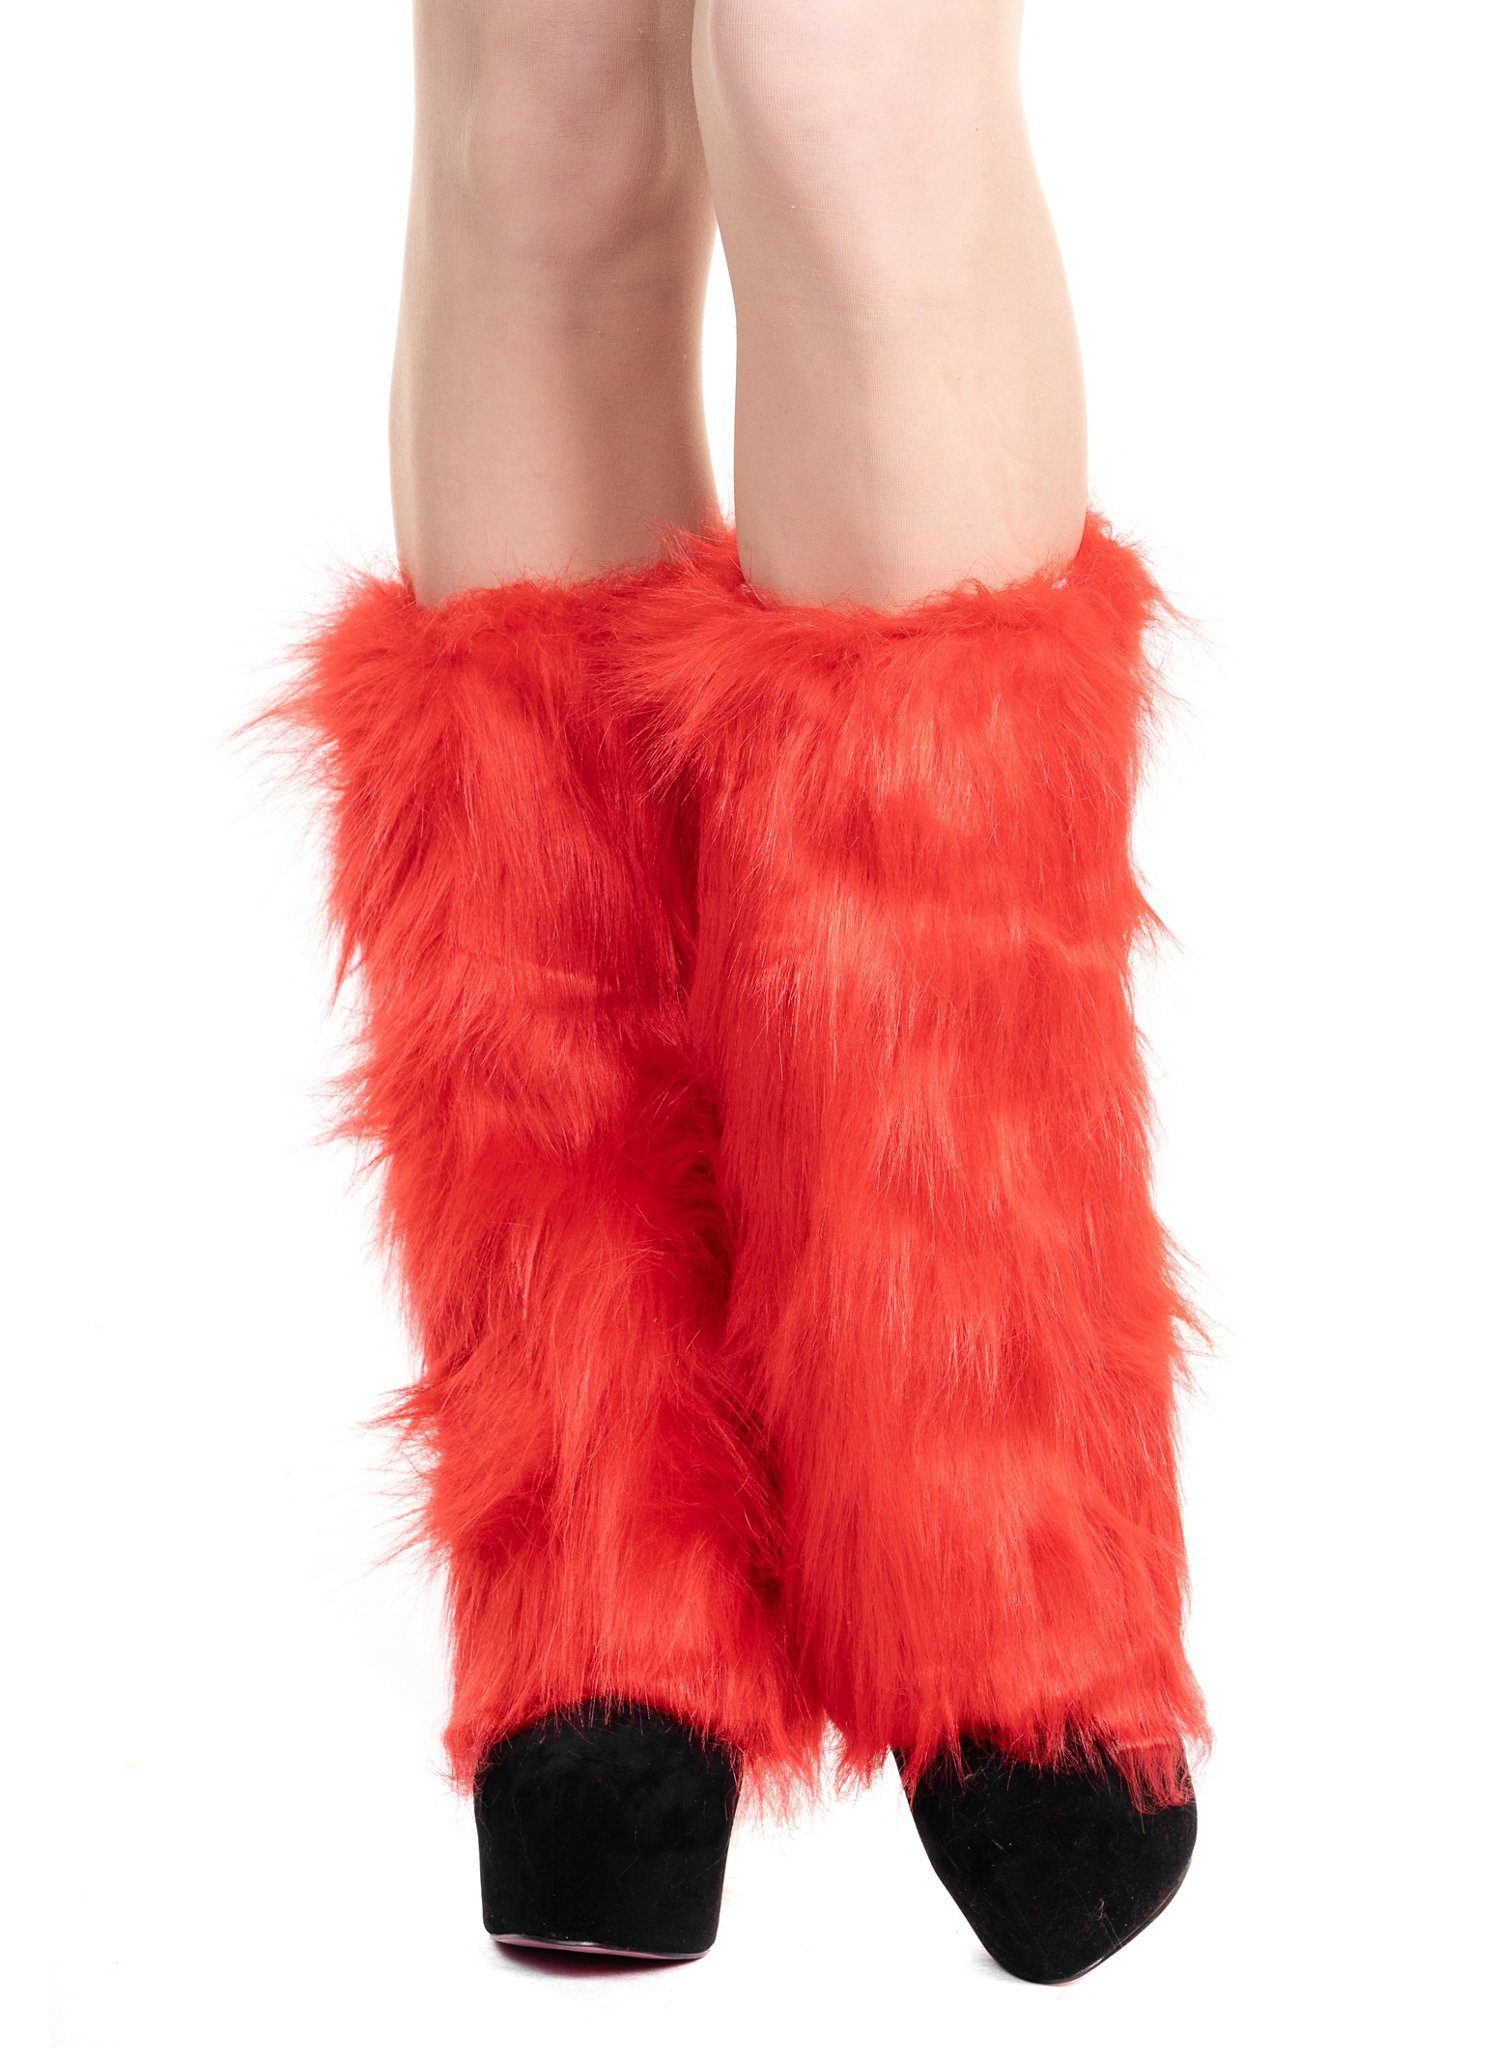 Leg Avenue Kostüm Rote Beinstulpen Fellstulpen für Fasching und Hall, Flauschige Legwarmer aus buntem Kunstfell